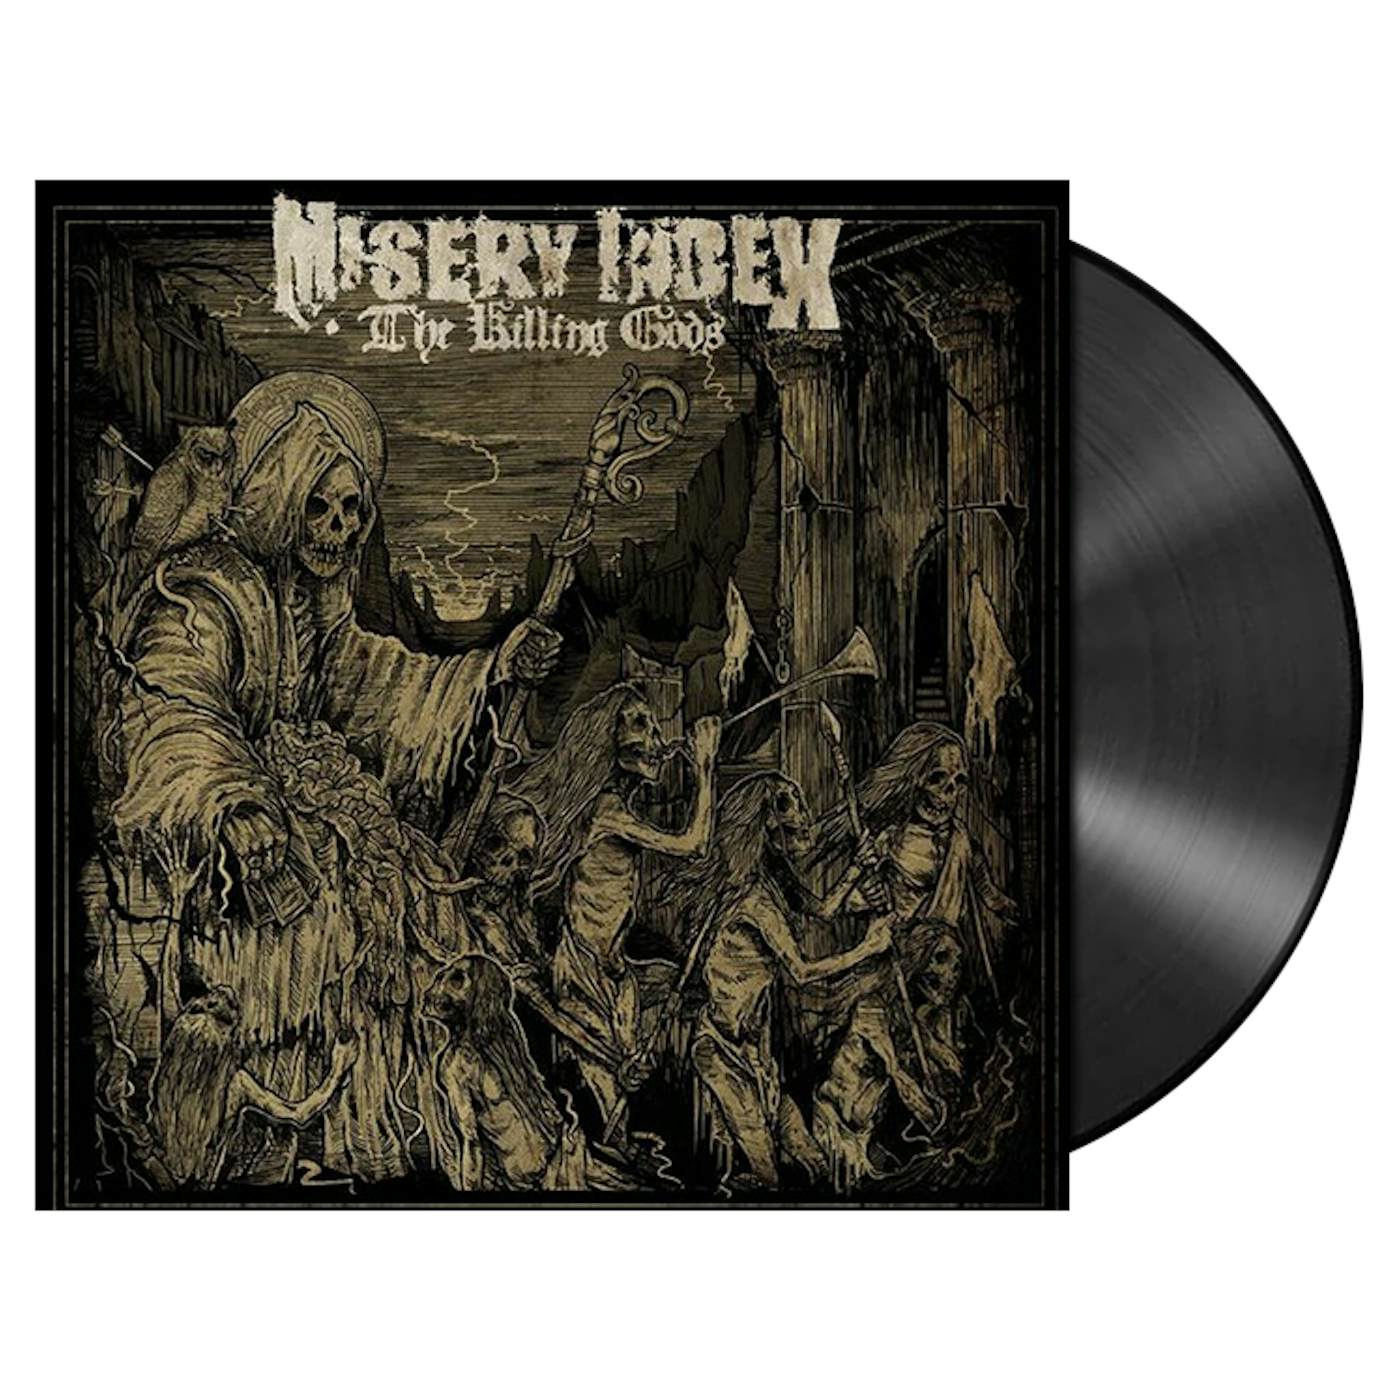 MISERY INDEX - 'The Killing Gods' 2xLP